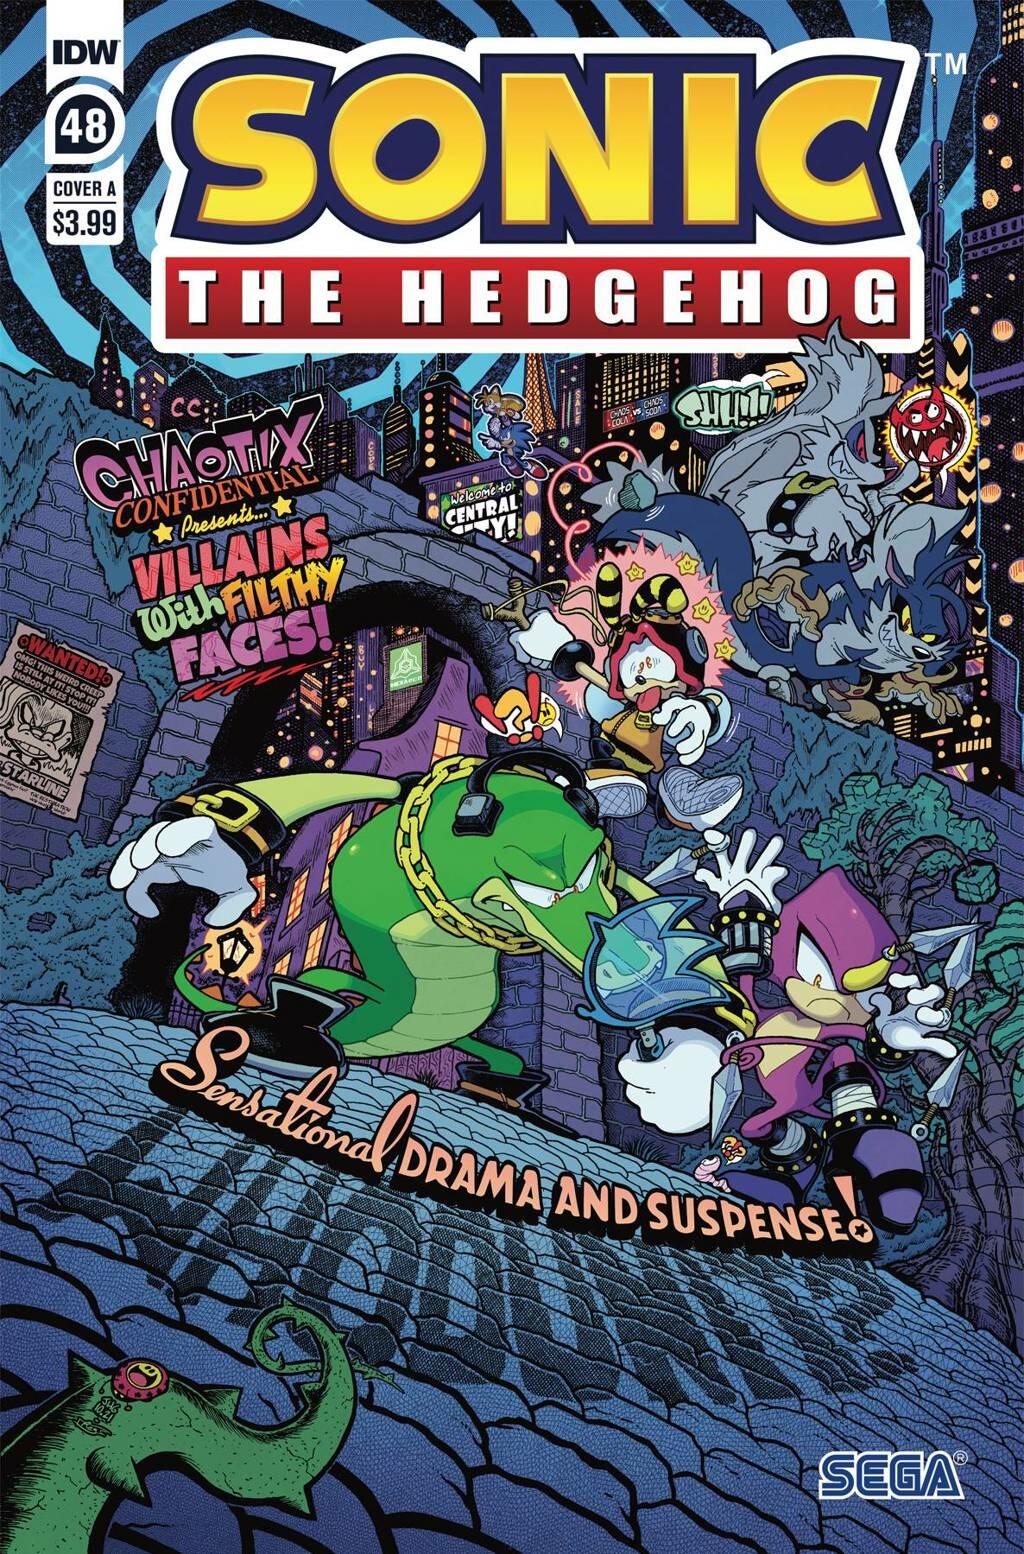 IDW Sonic the Hedgehog #48